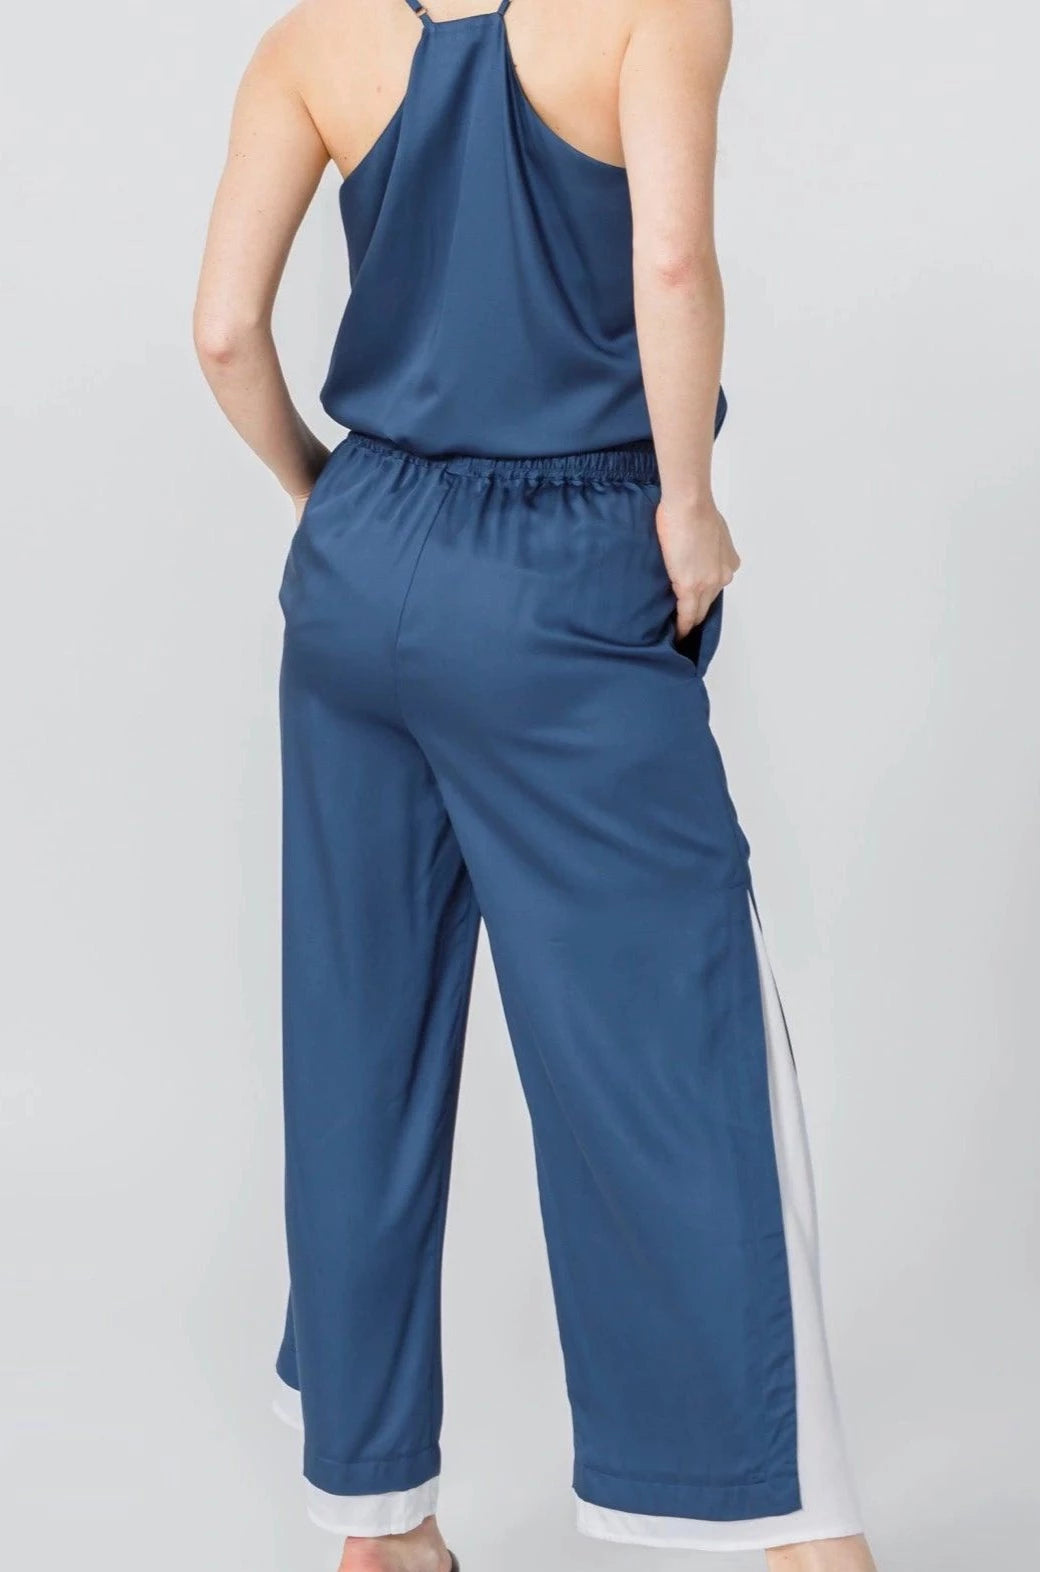 Women's Color Block Asymmetric Wide Pants - NOT LABELED